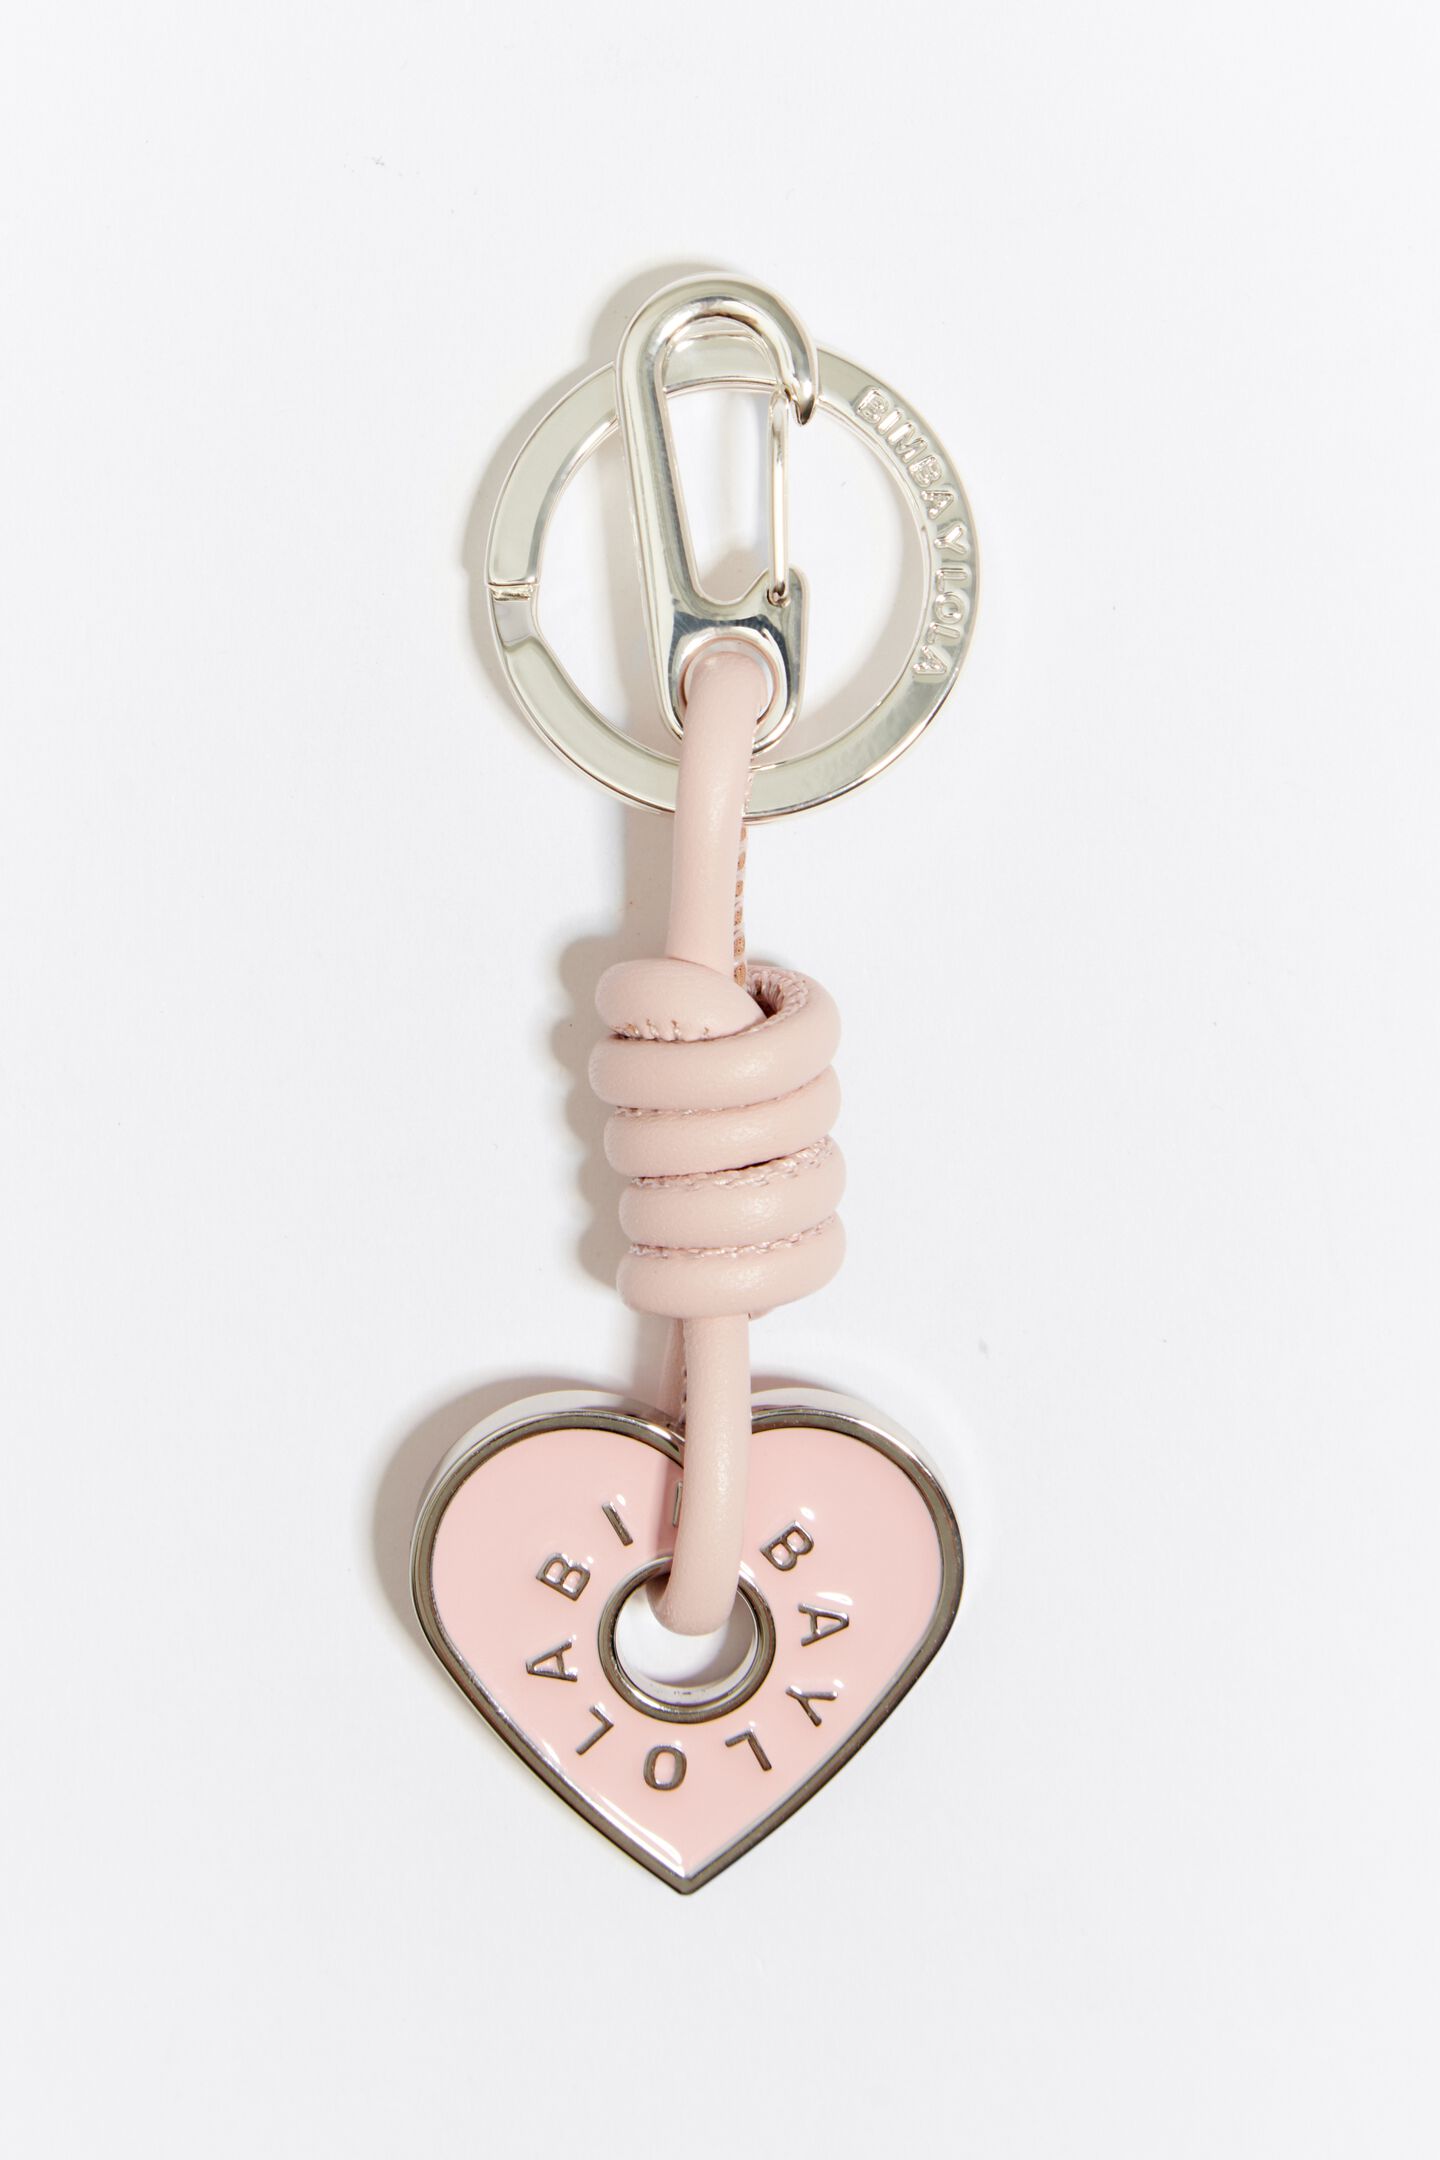 Pink Glow Keychain Creative Flowing Sand Bottle Keychain Women's Bag  Pendant Car Keychain Small Jewelry Cute Gift Wholesale